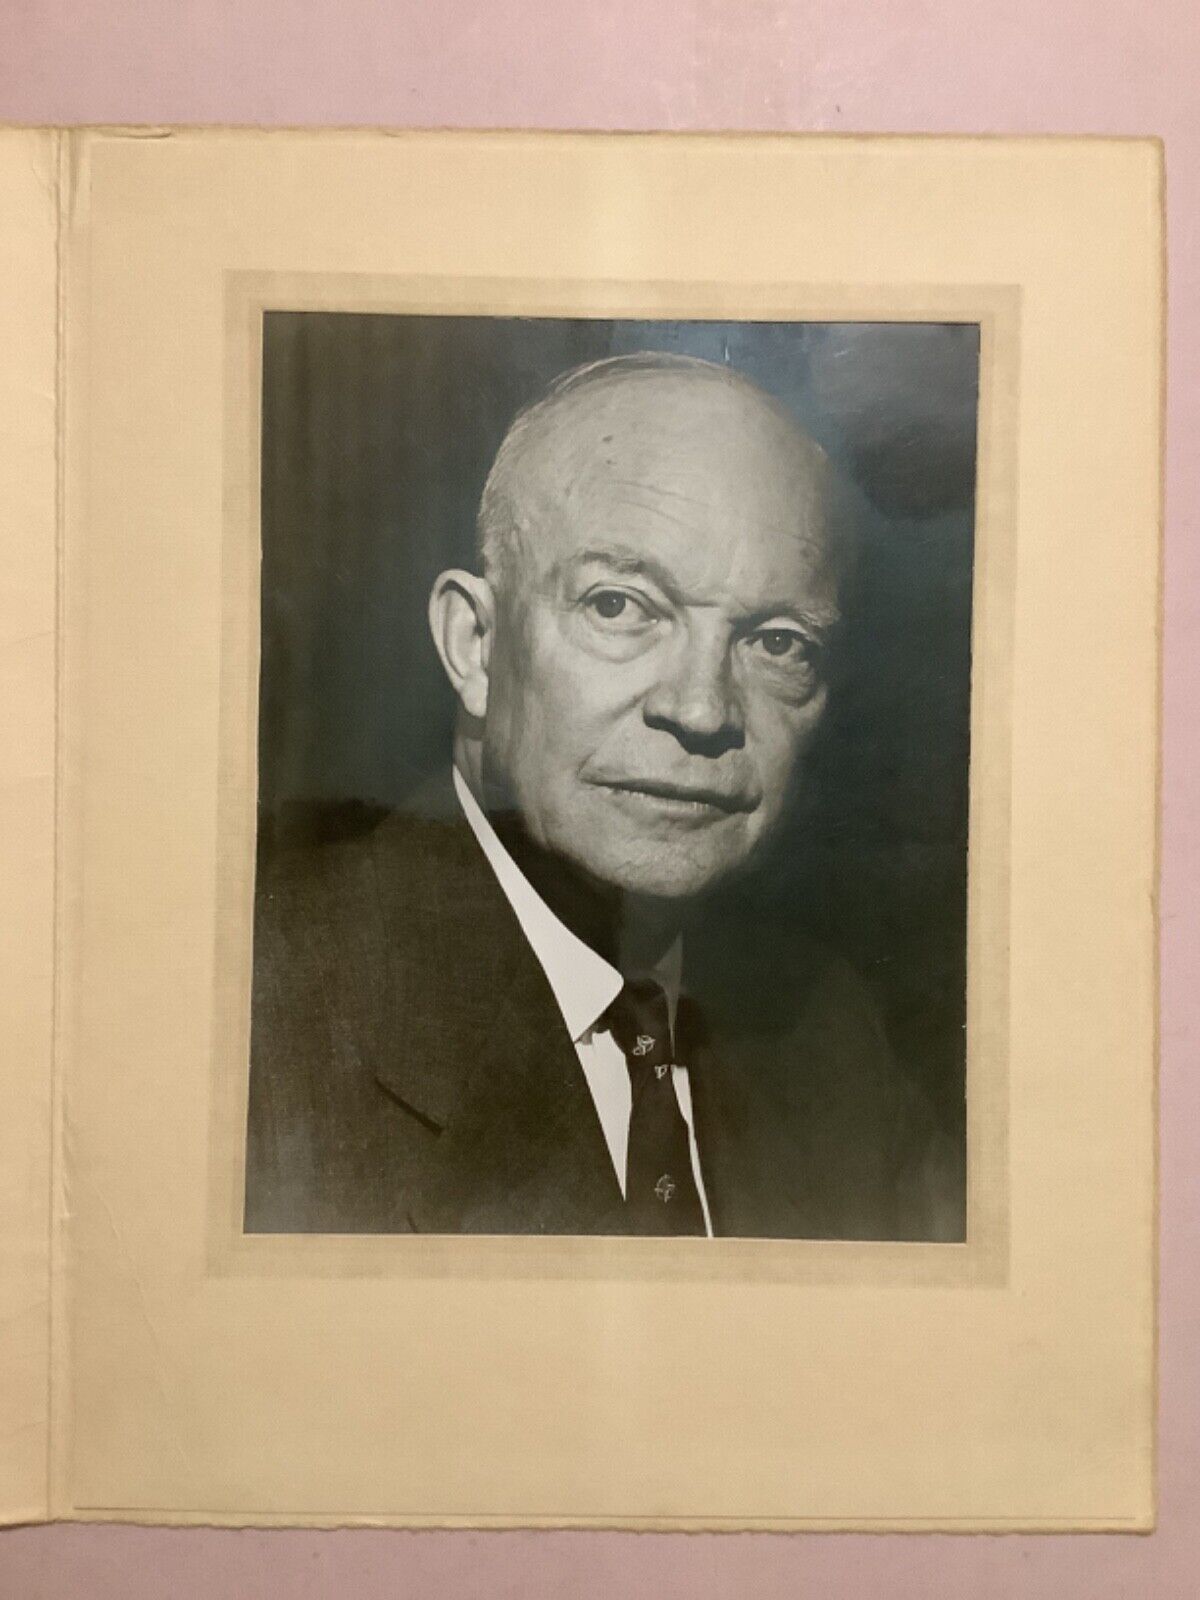 1950’s Portrait of Dwight Eisenhower - by Photo Reflex in large holder (11 x 14)